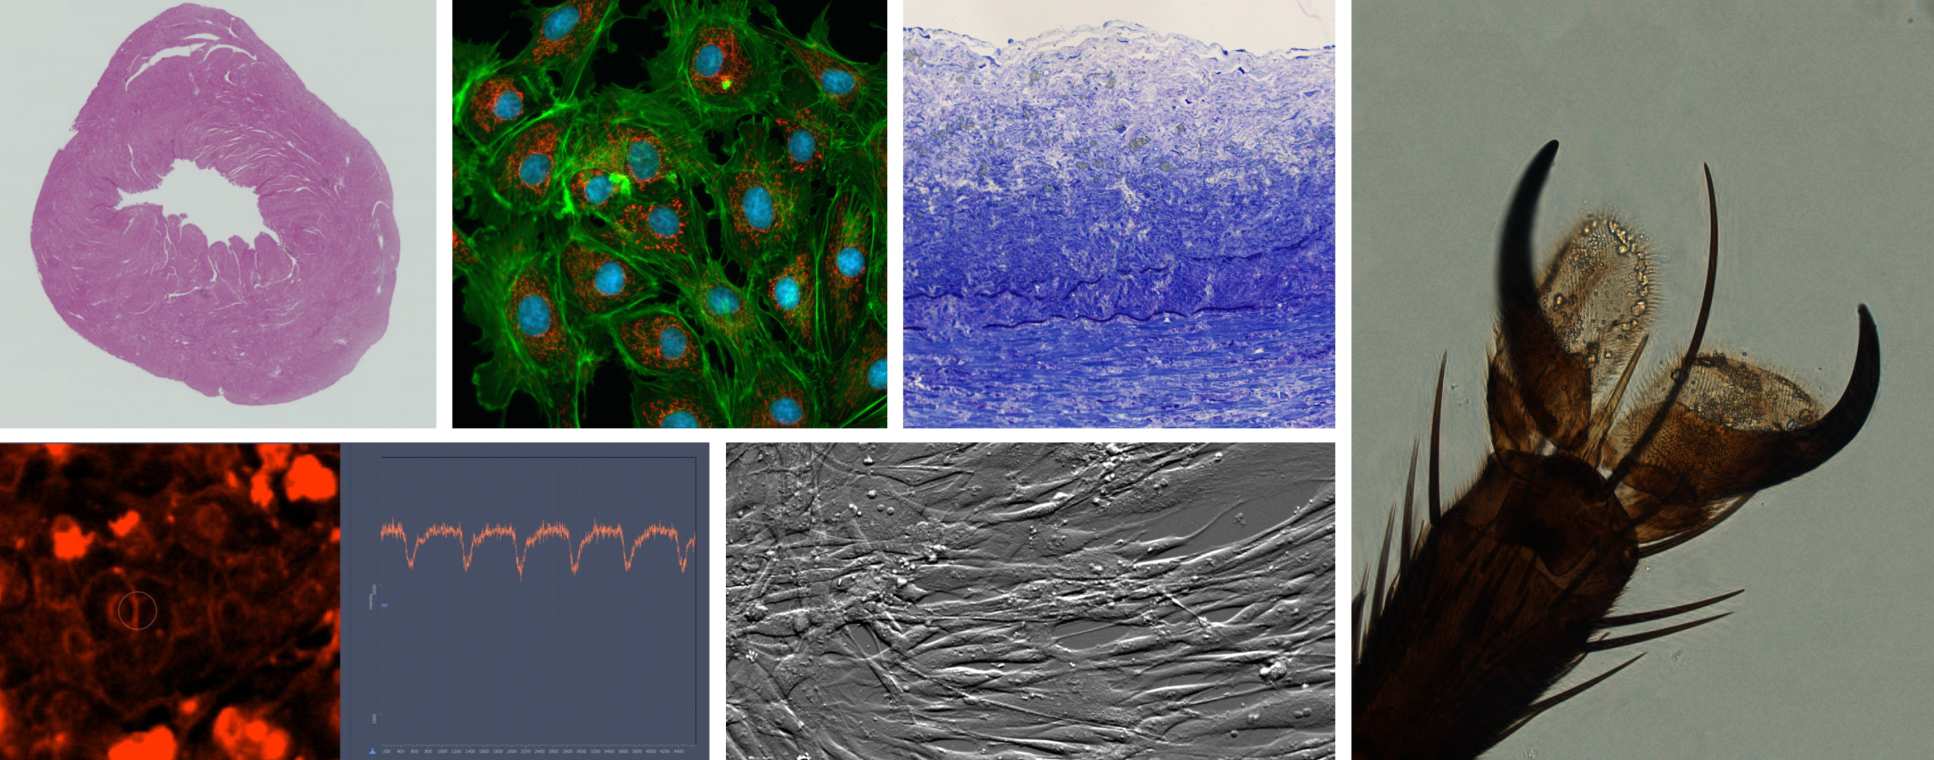 Composite microscopic images taken using FILM microscopic equipment